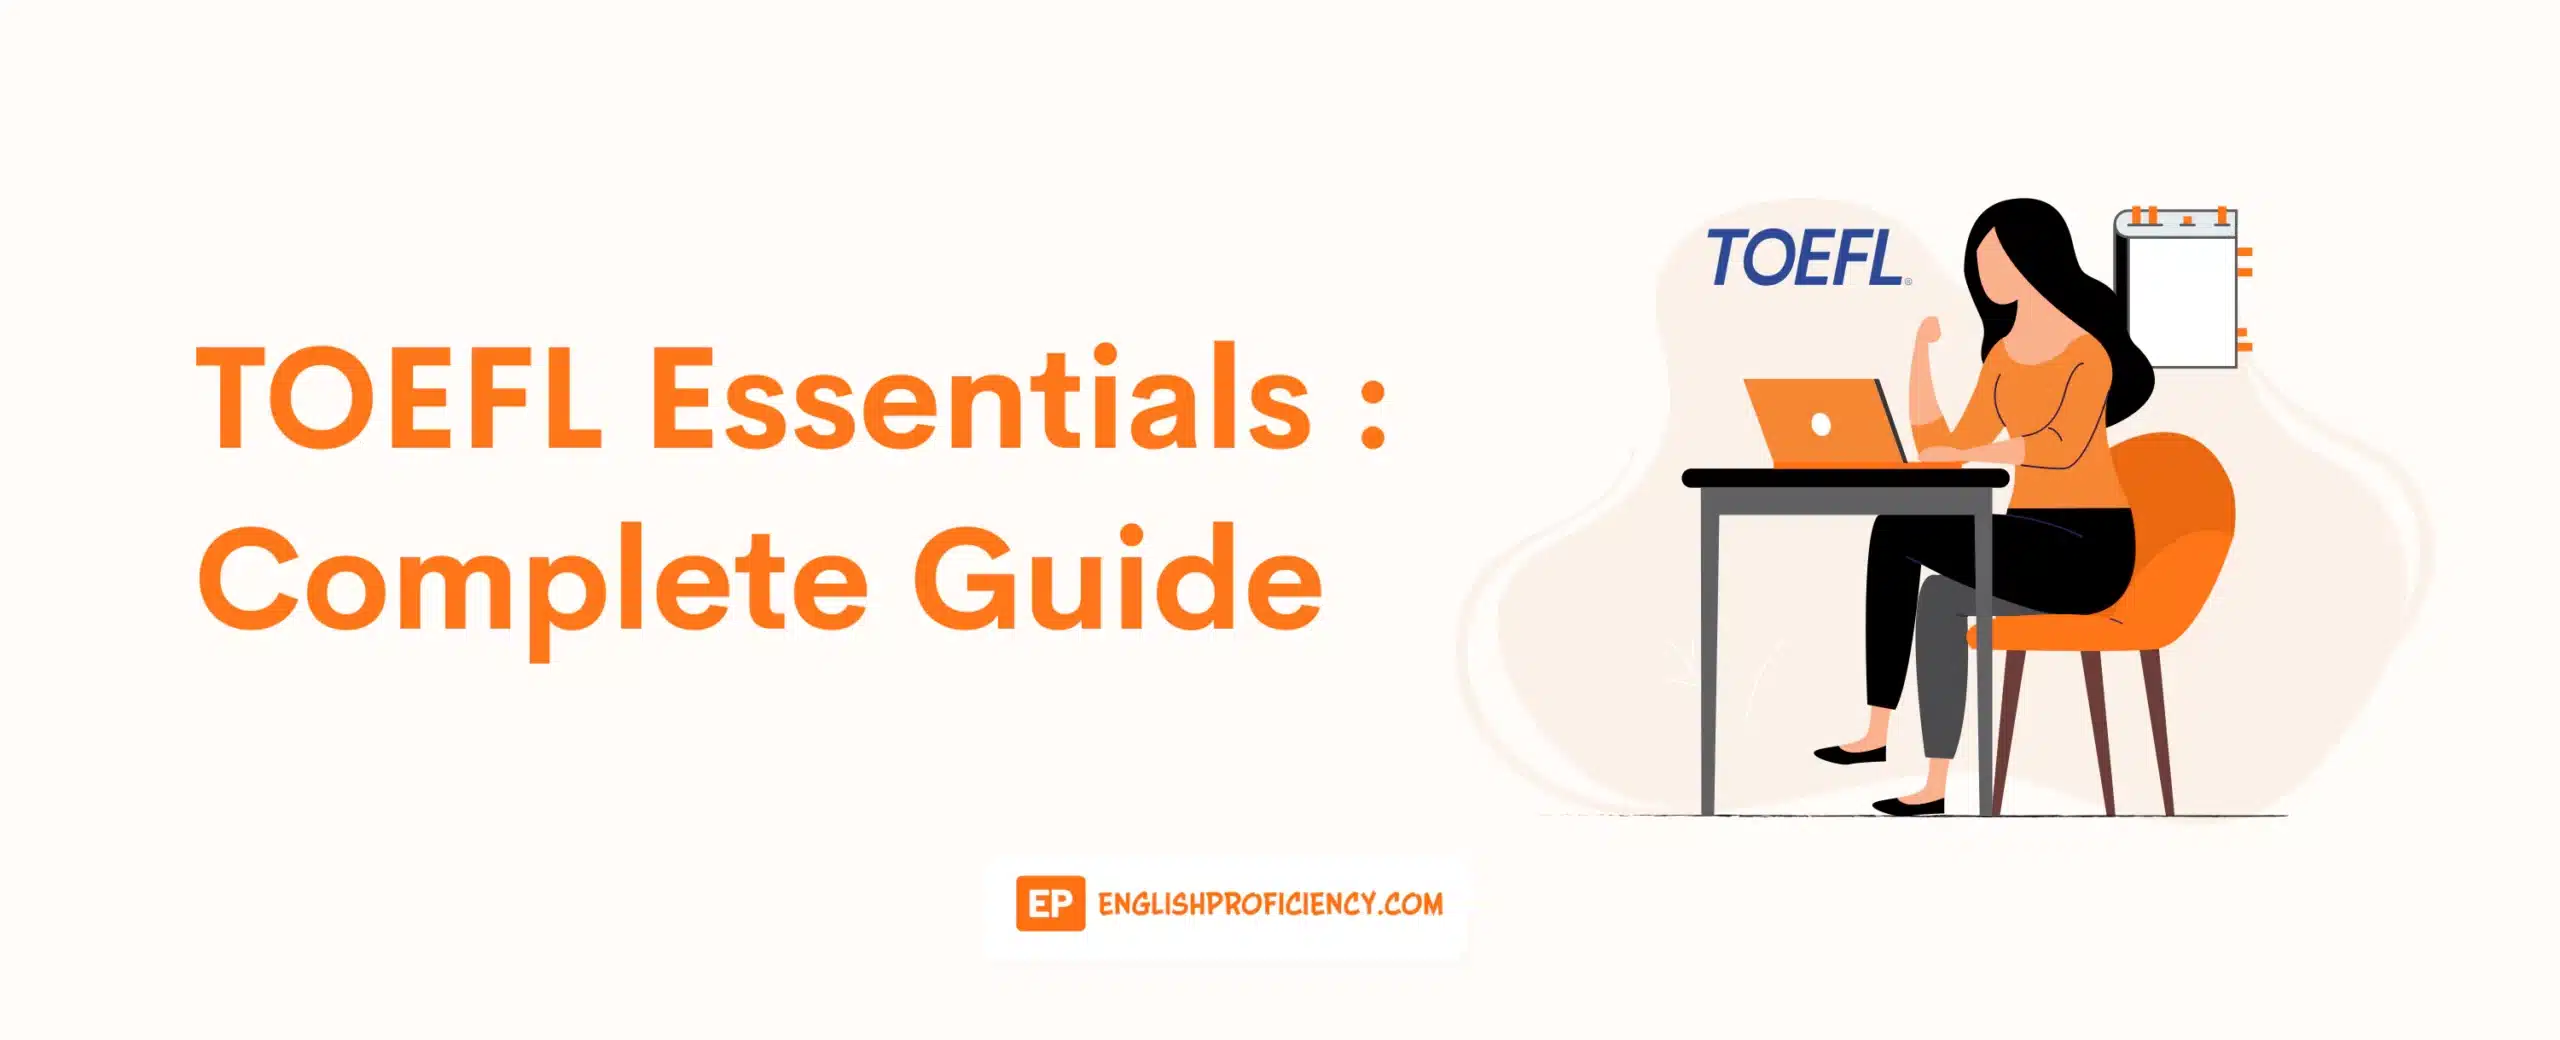 TOEFL Essentials Complete Guide